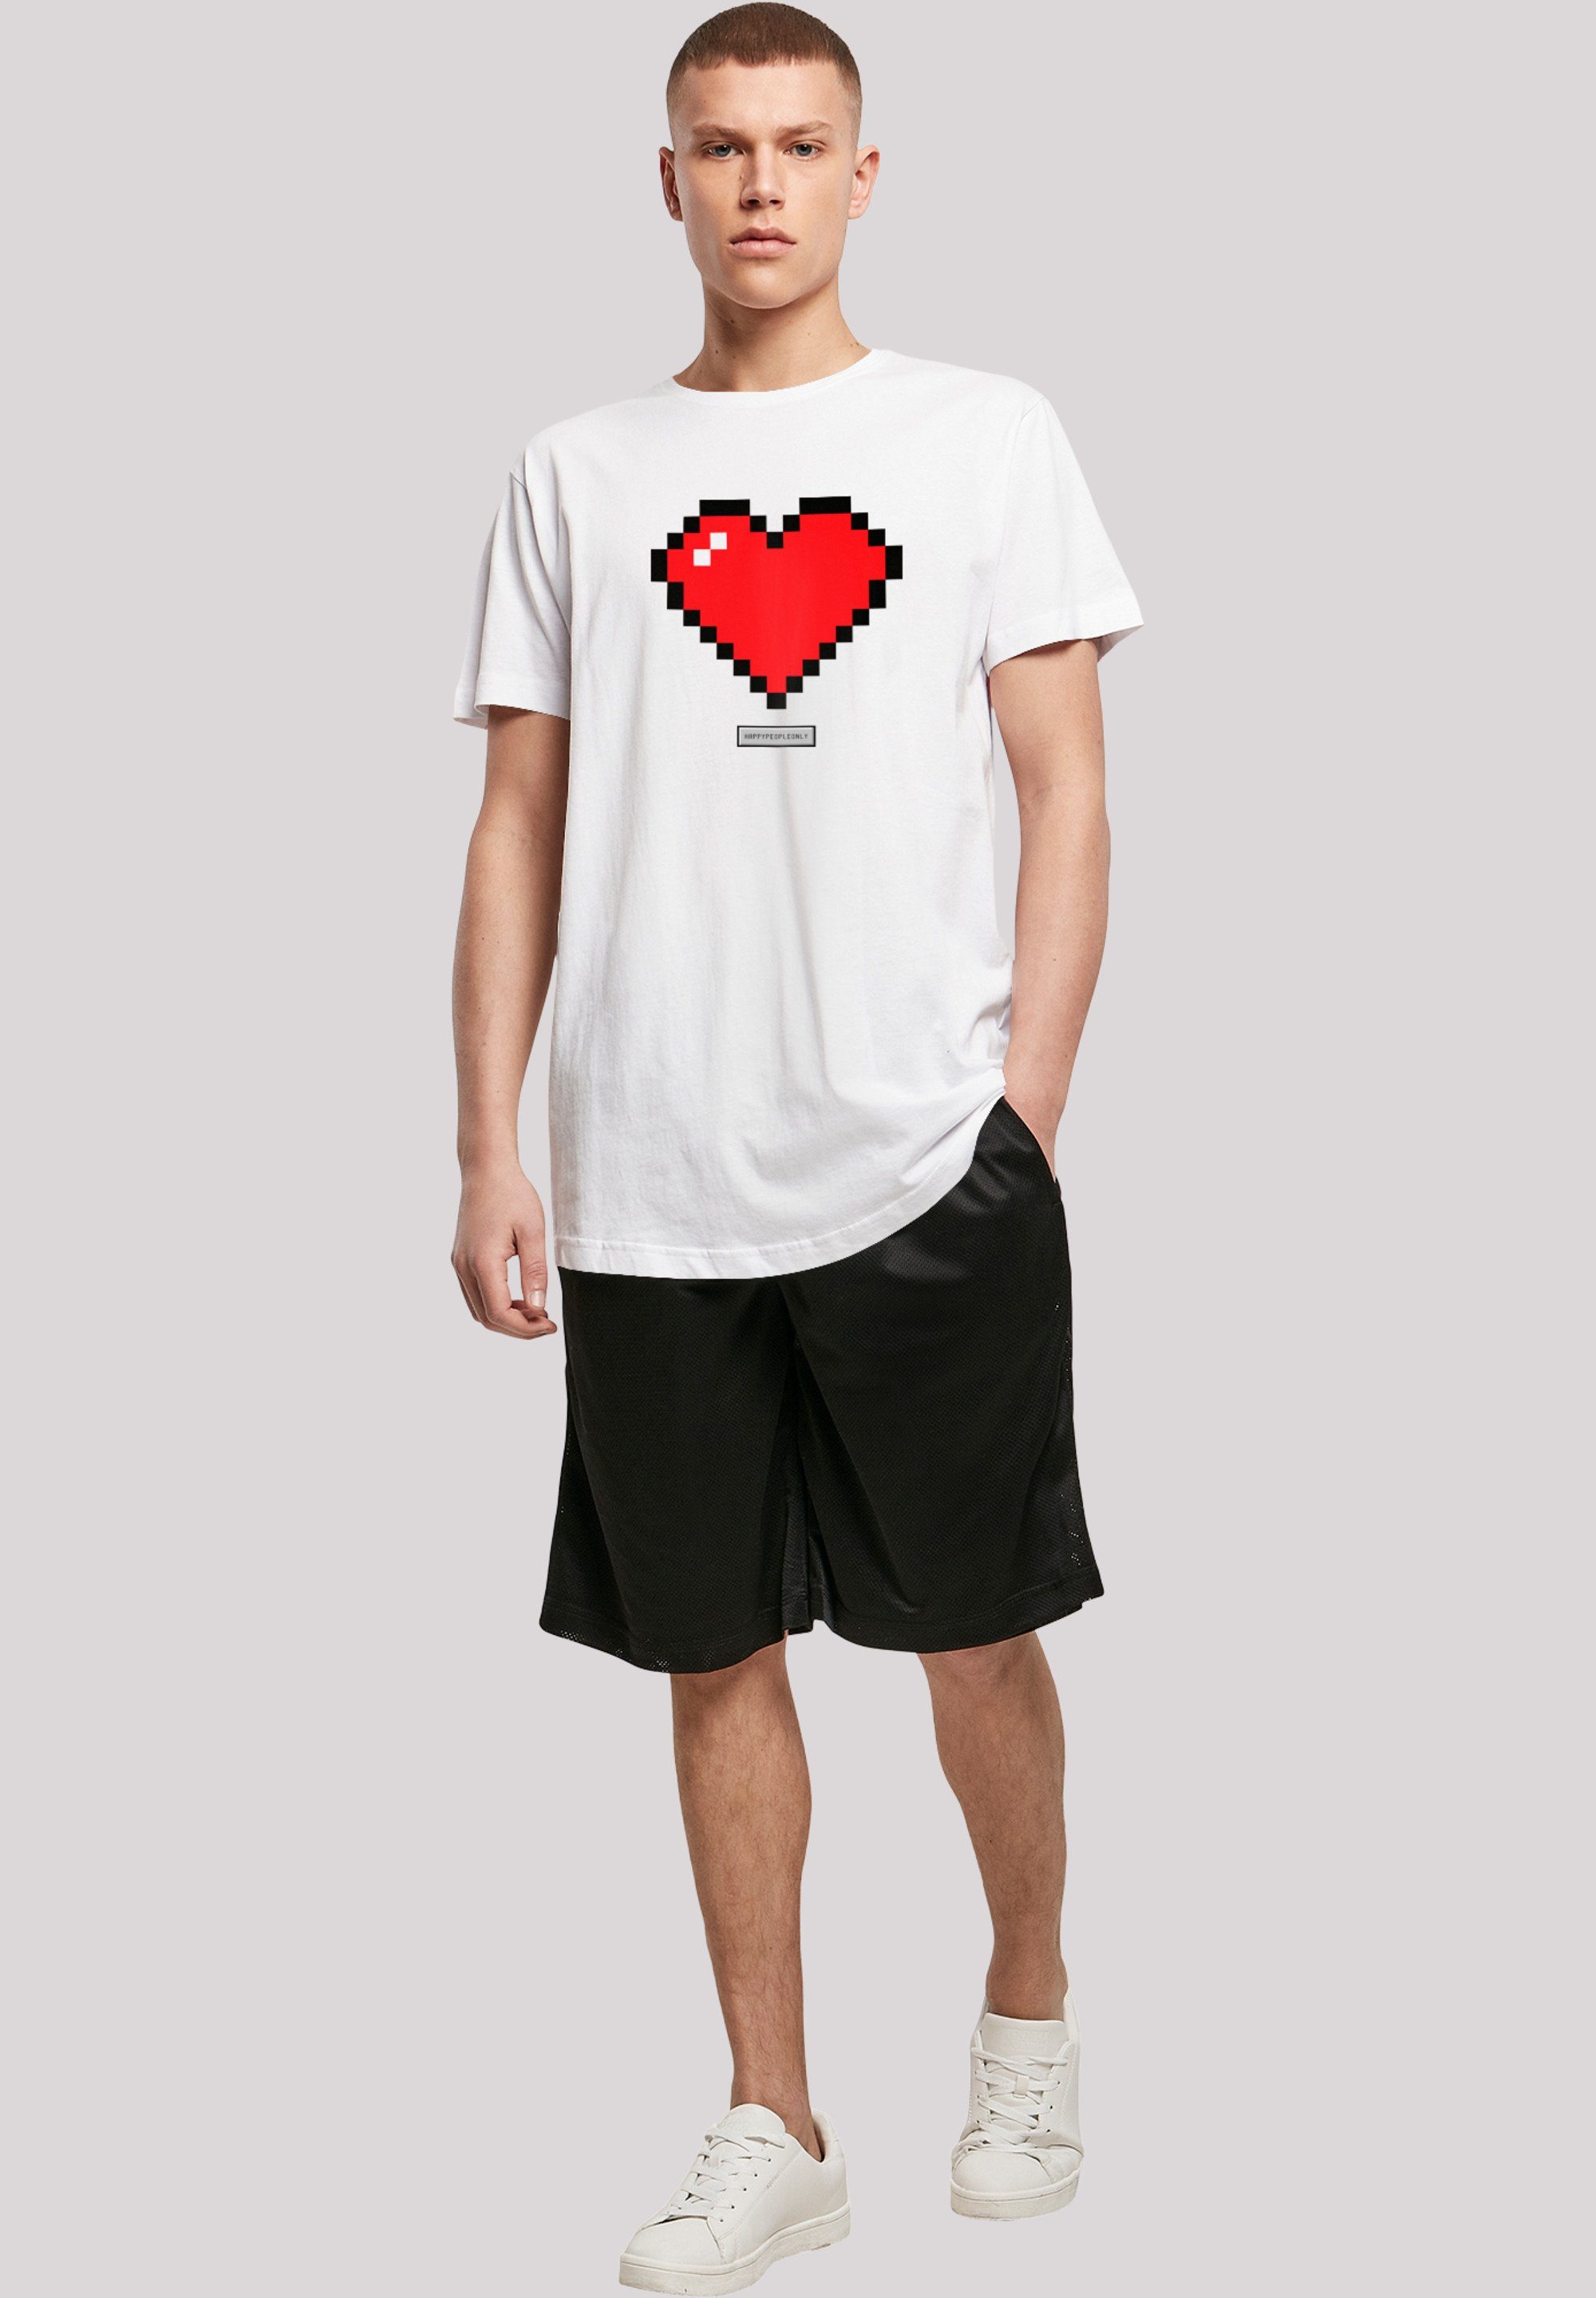 F4NT4STIC T-Shirt Pixel Vibes Herz Good Print weiß People Happy